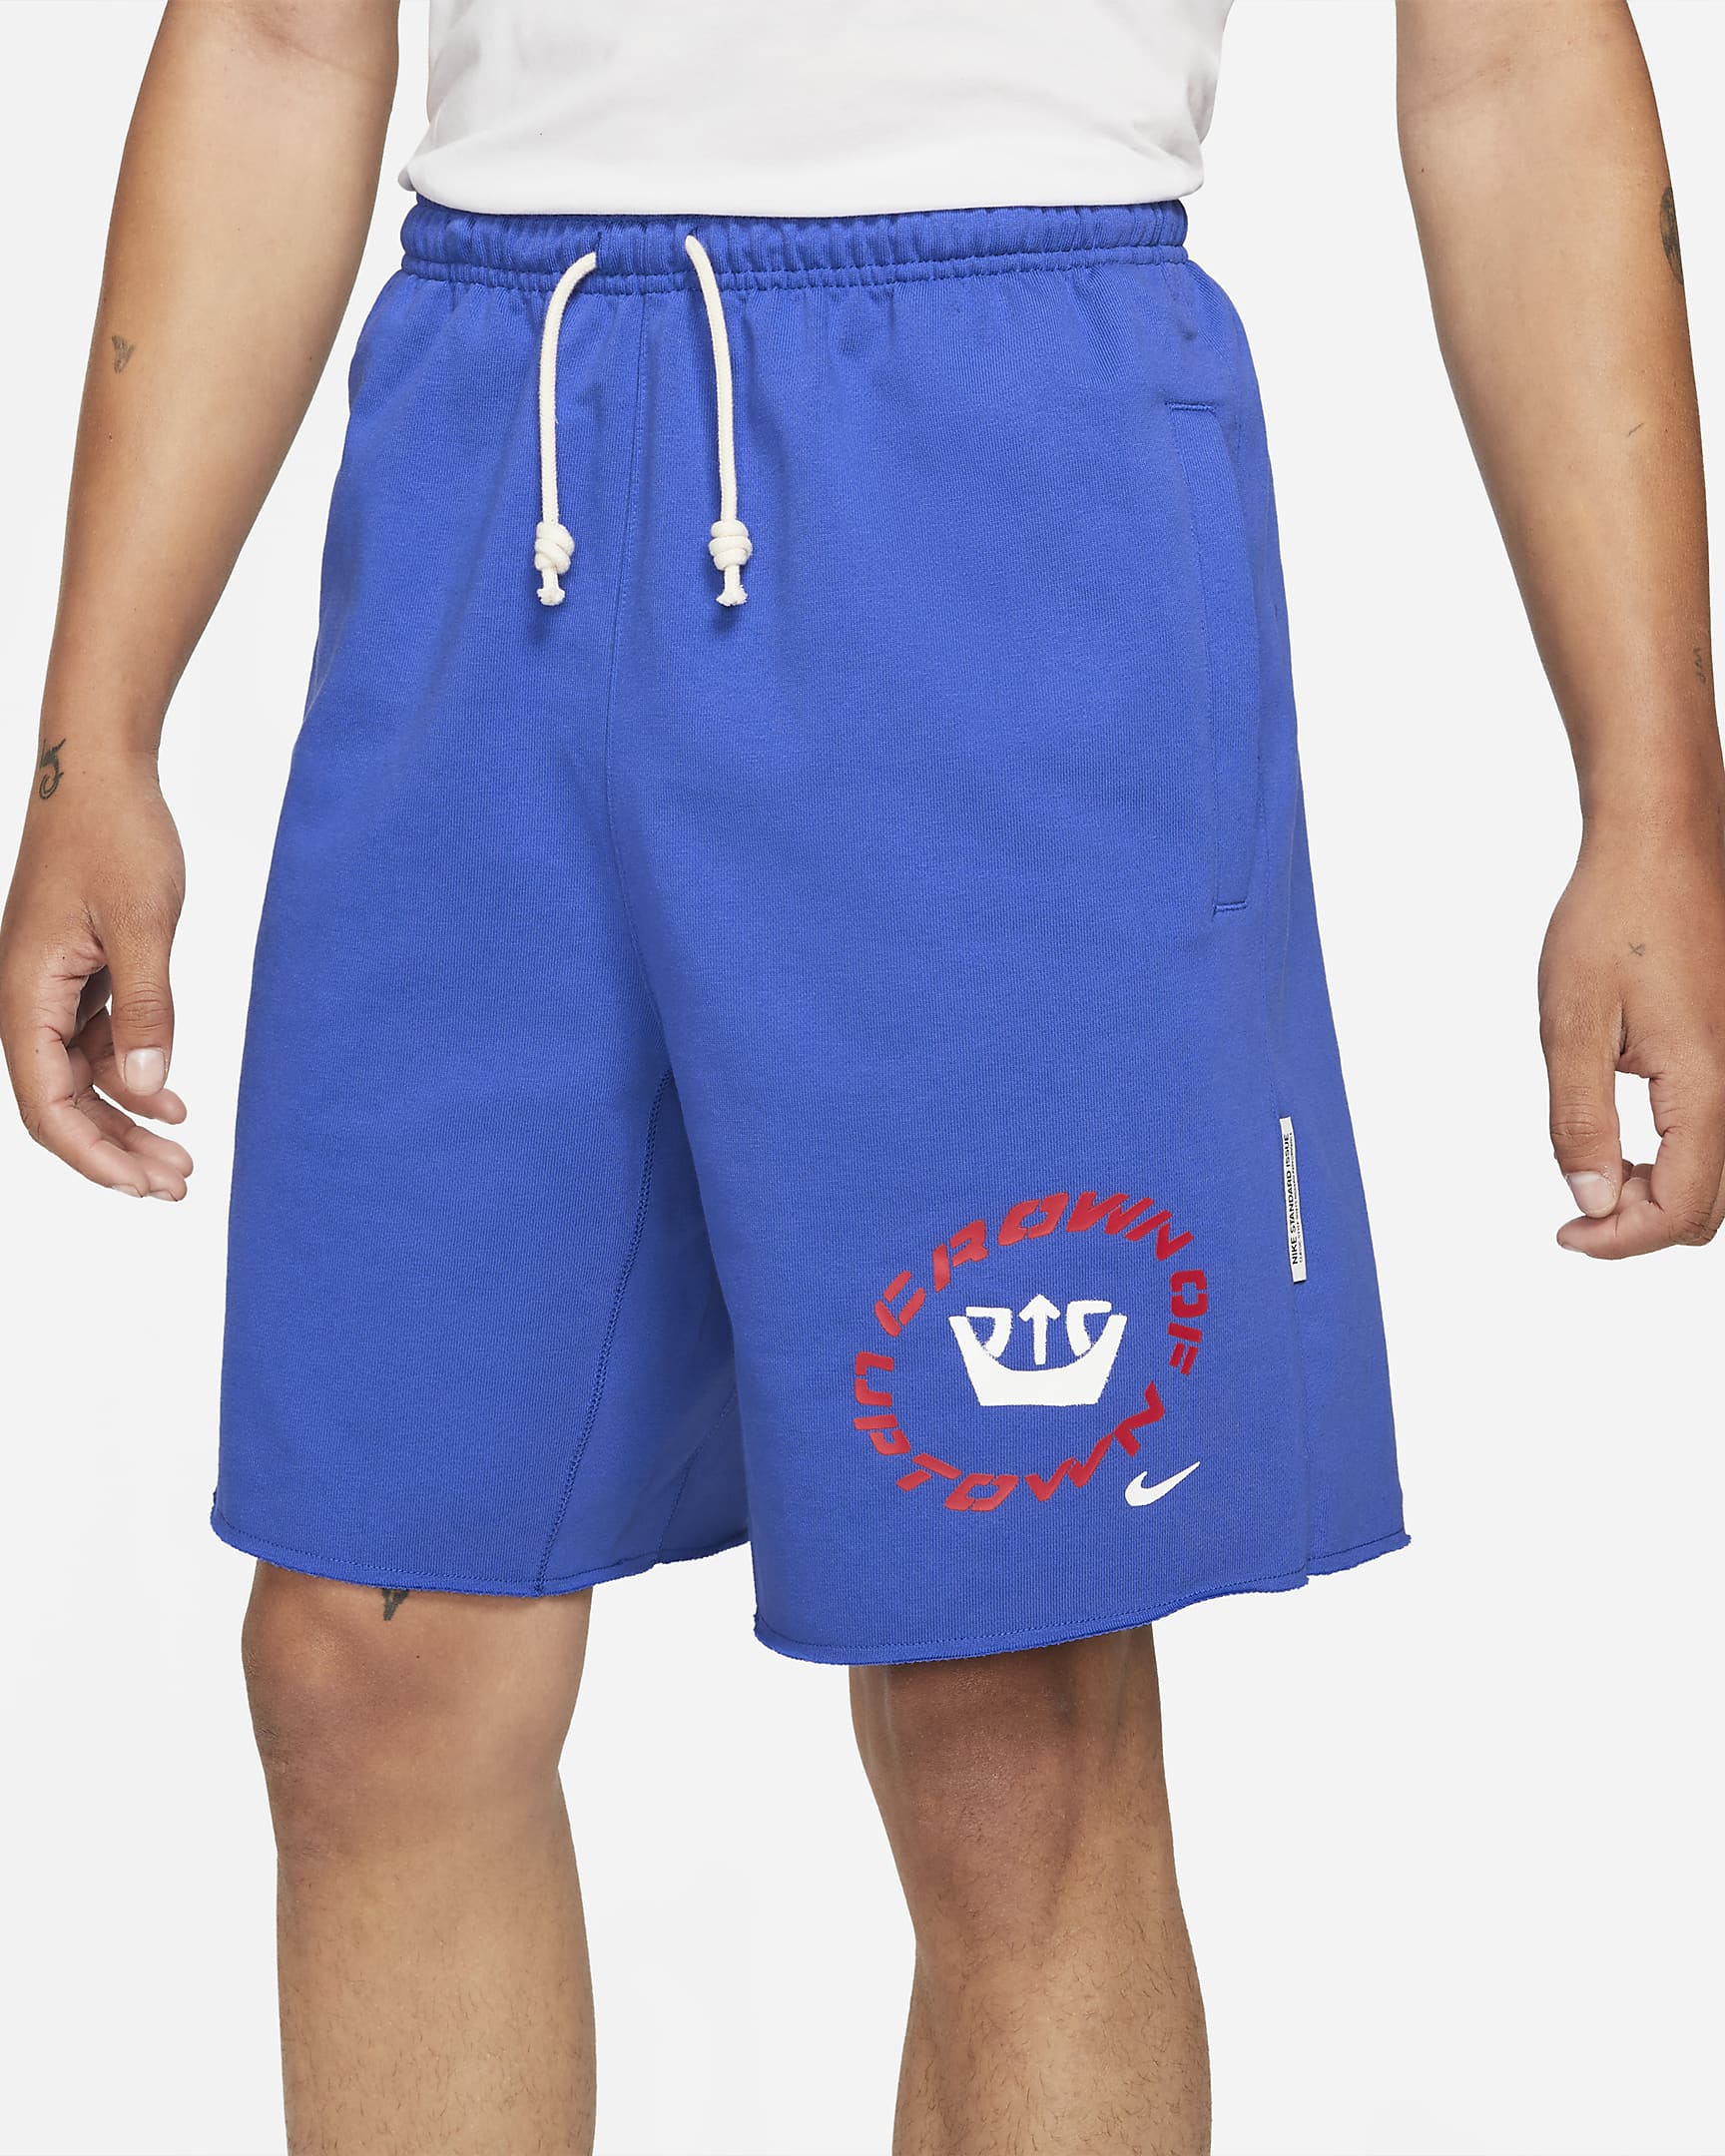 standard-issue-dyckman-mens-basketball-fleece-shorts-BwjwhC-1.png